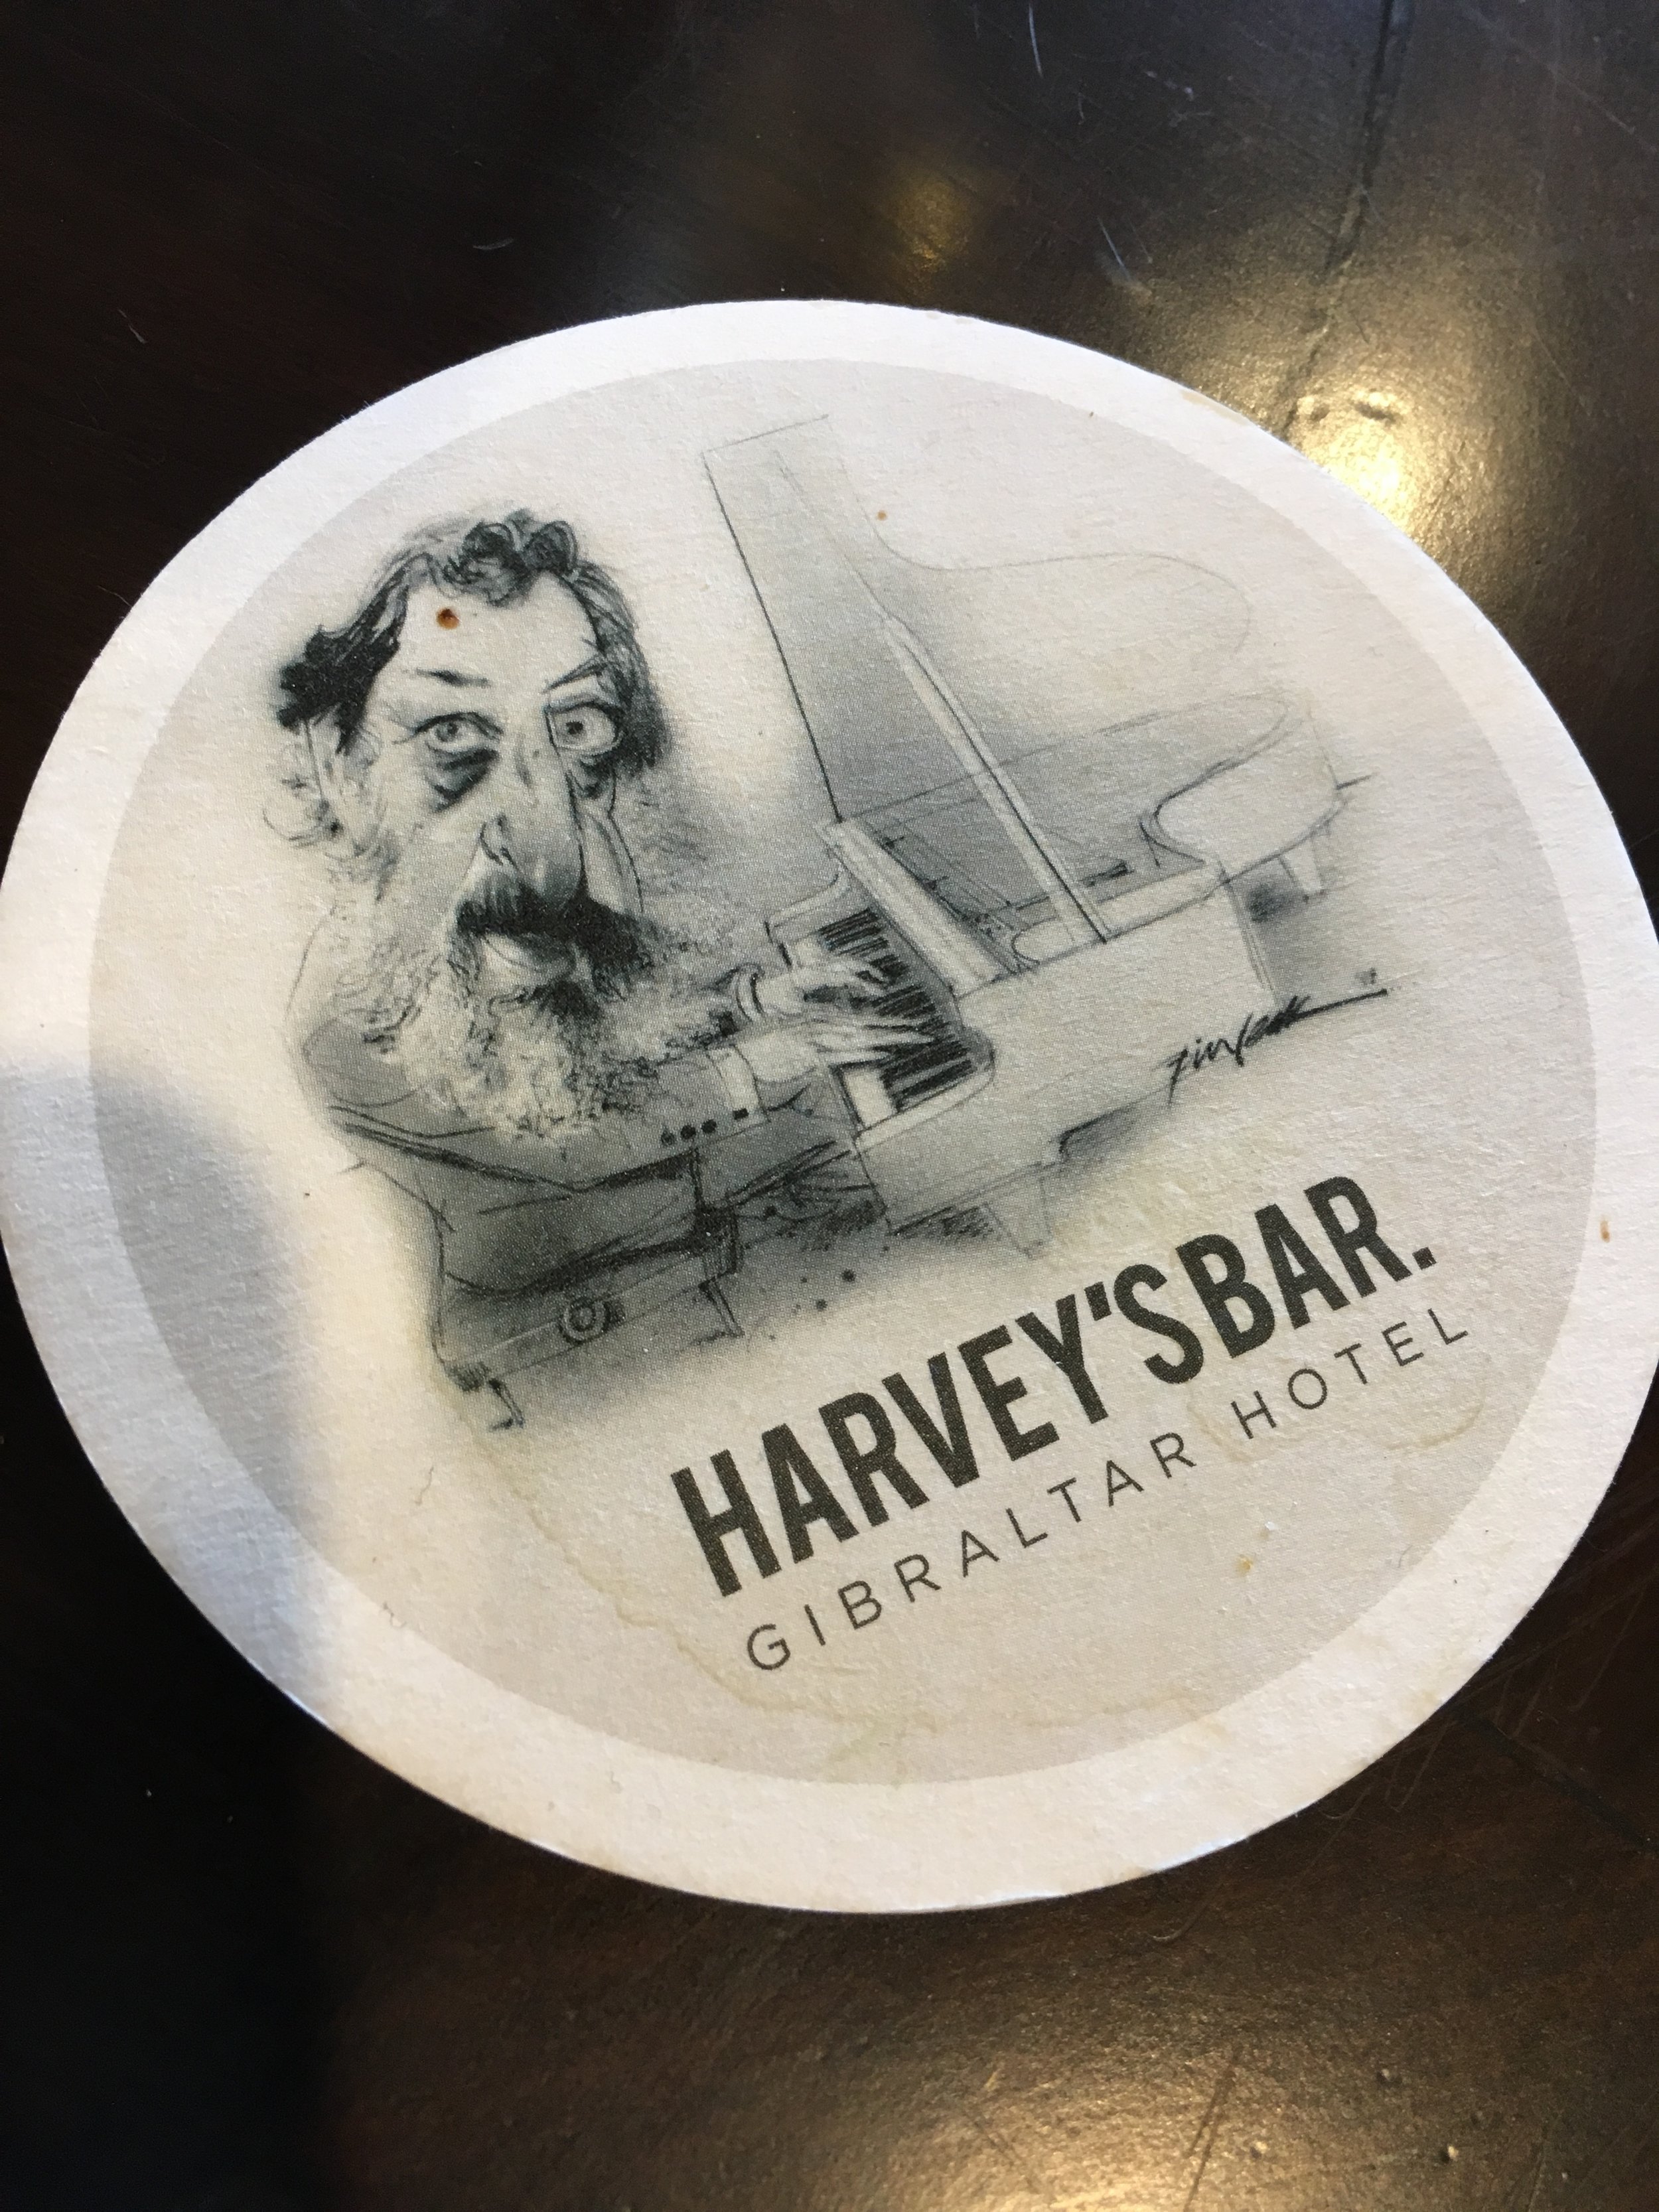   A coaster at Harvey's Bar Gibraltar Hotel  PHOTO: Robert McKnight 